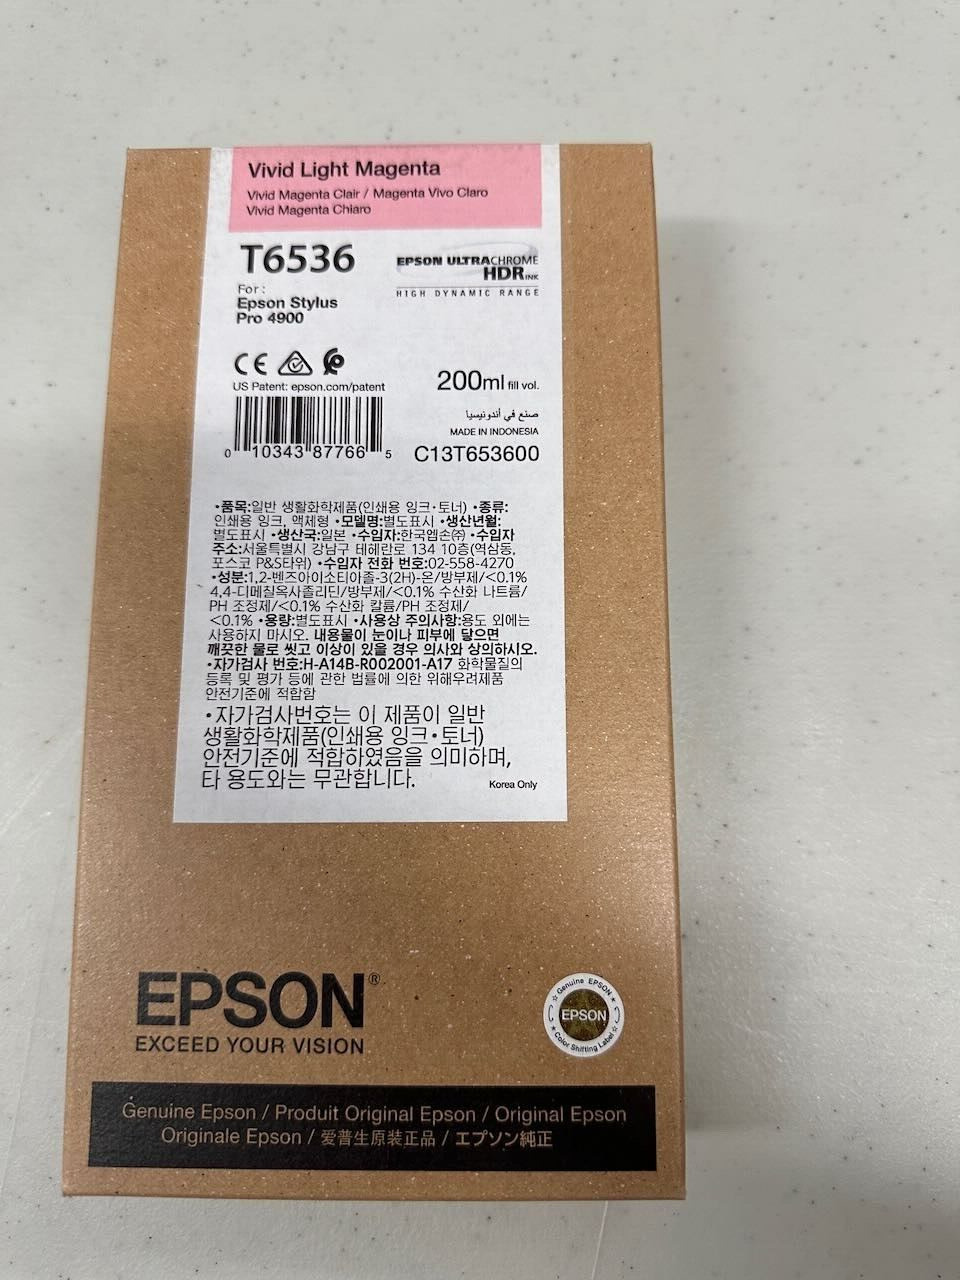 Genuine Epson T6536 Vivid Light Magenta Ultrachrome HDR Ink 4900 exp: 09/21/2021